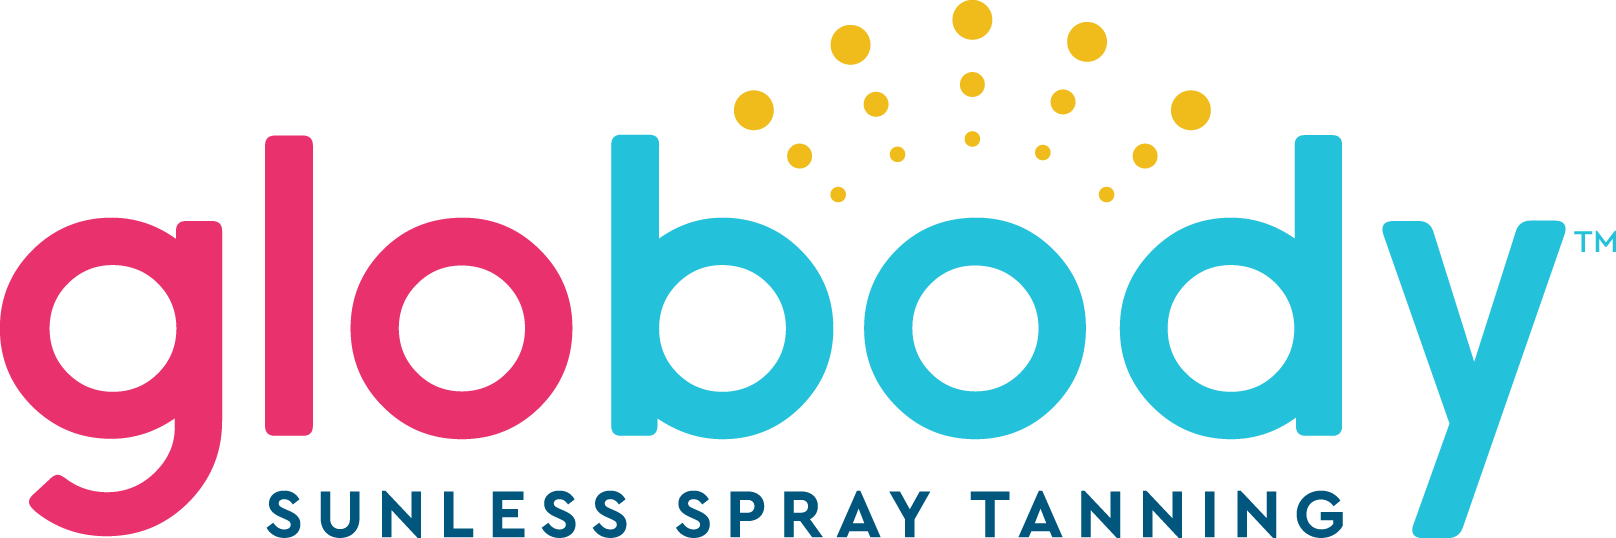 GloBody sunless spray tanning logo